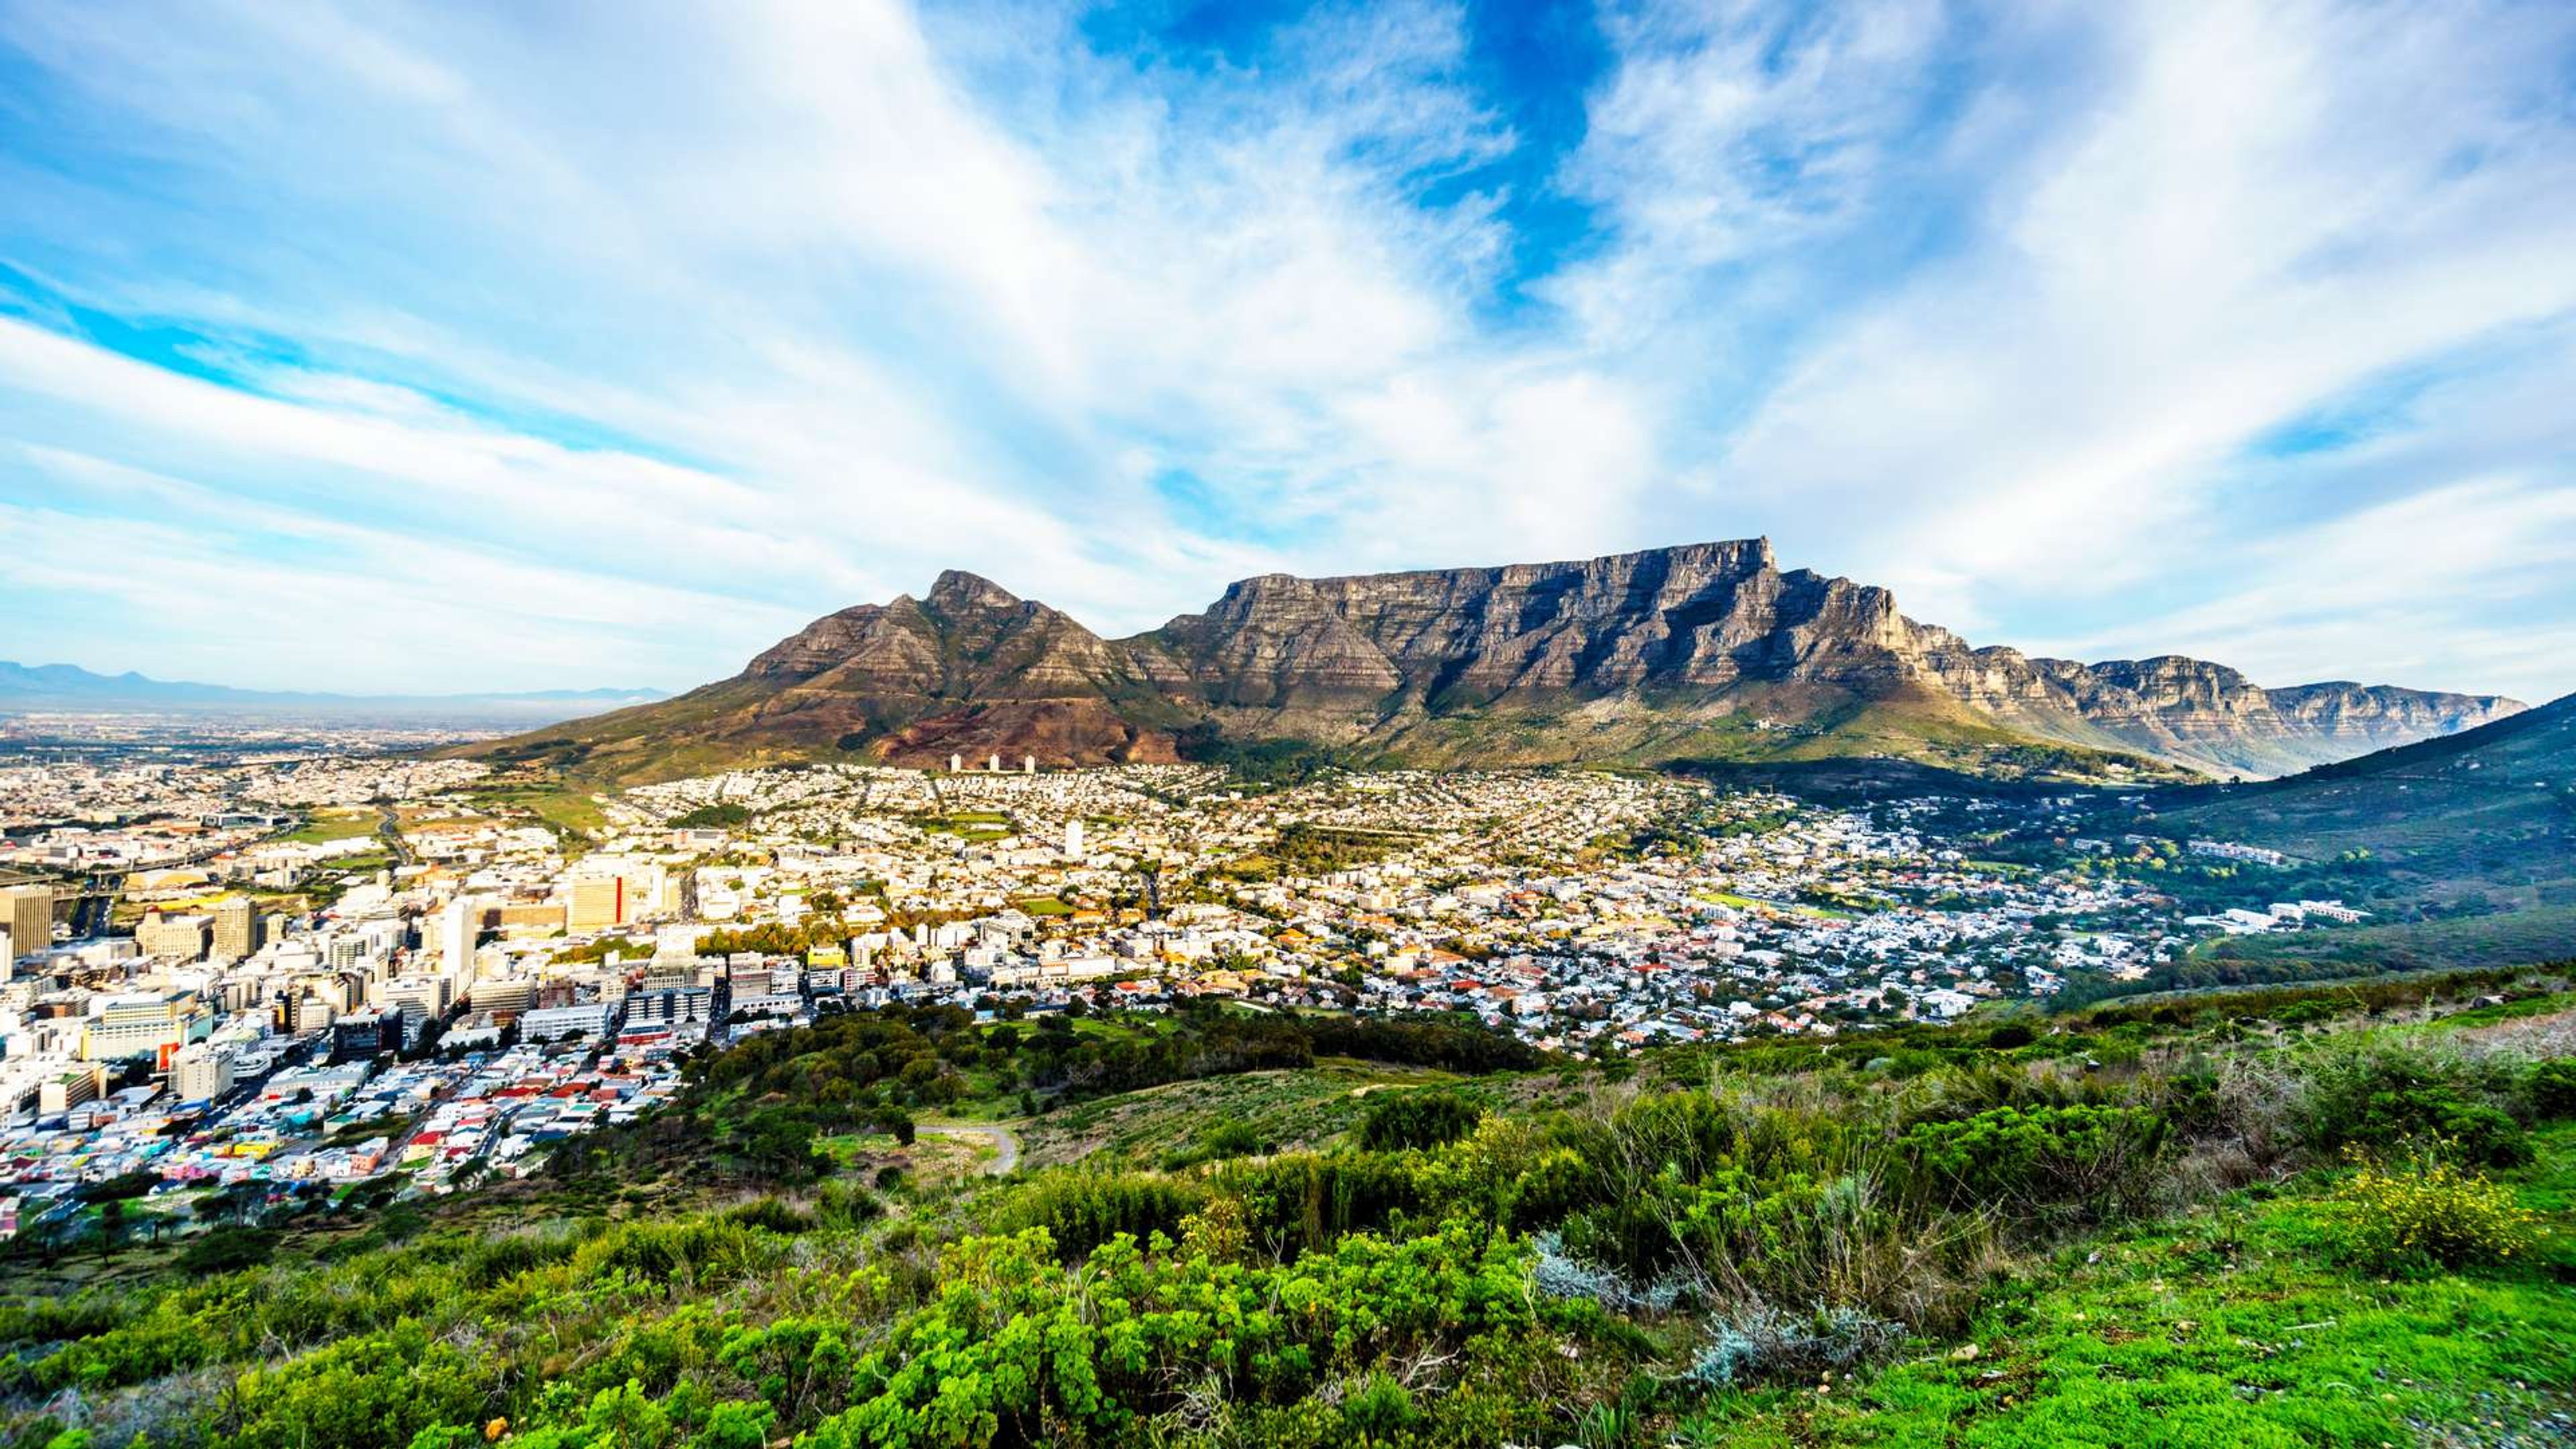 Zuid Afrika Kaapstad Table Mountain, Devils Peak, Lions Head and the Twelve Apostle